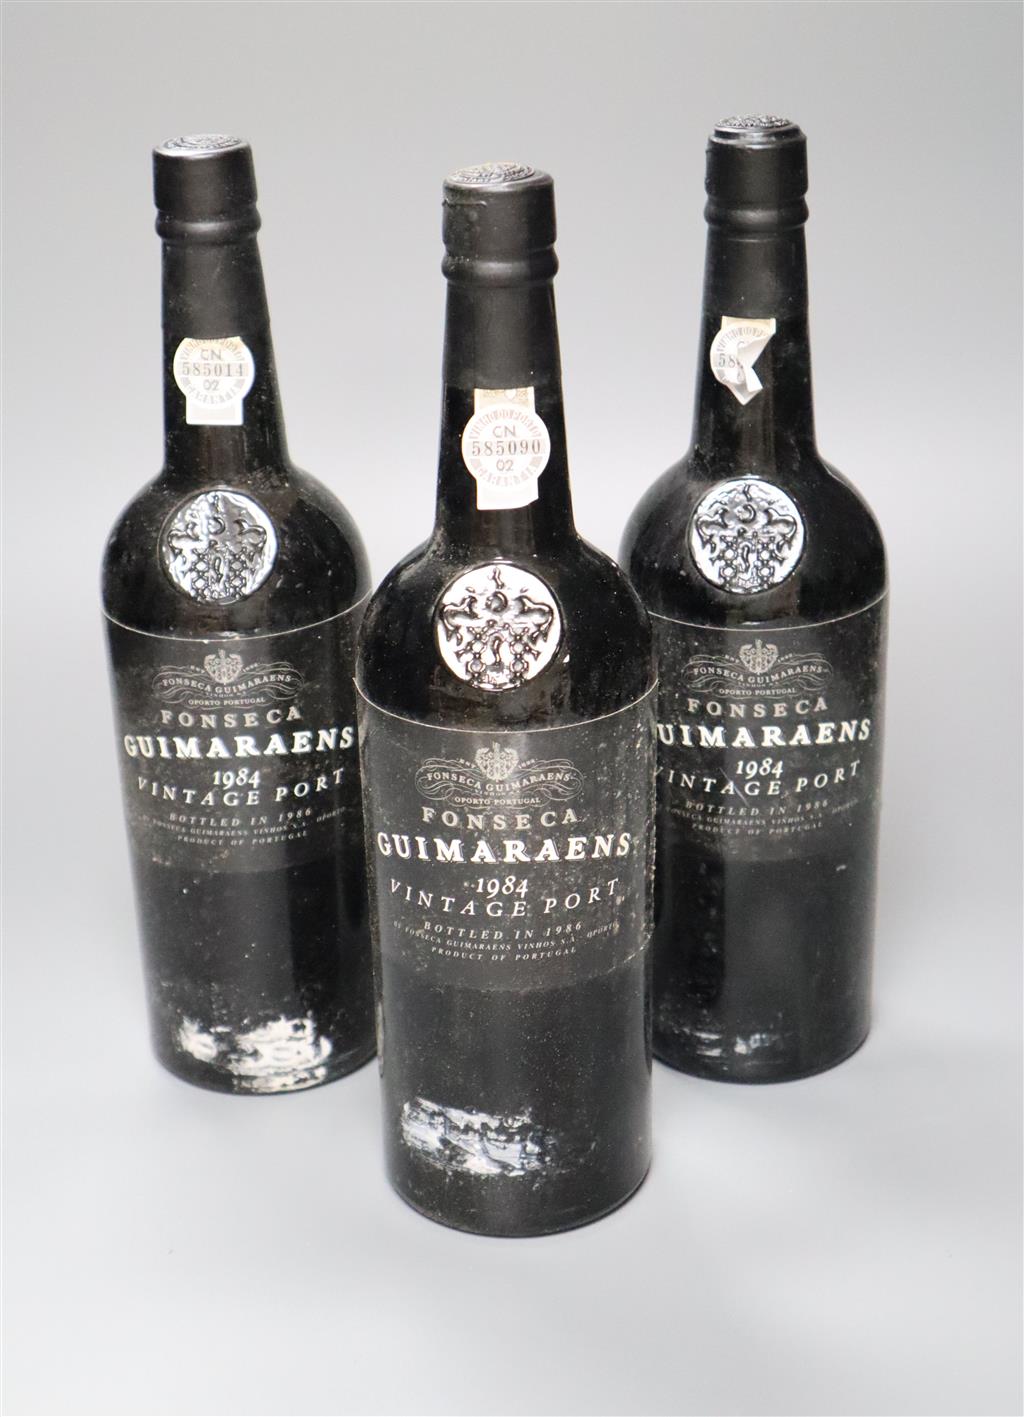 Six bottles of Fonseca Guimaraens 1984 vintage Port